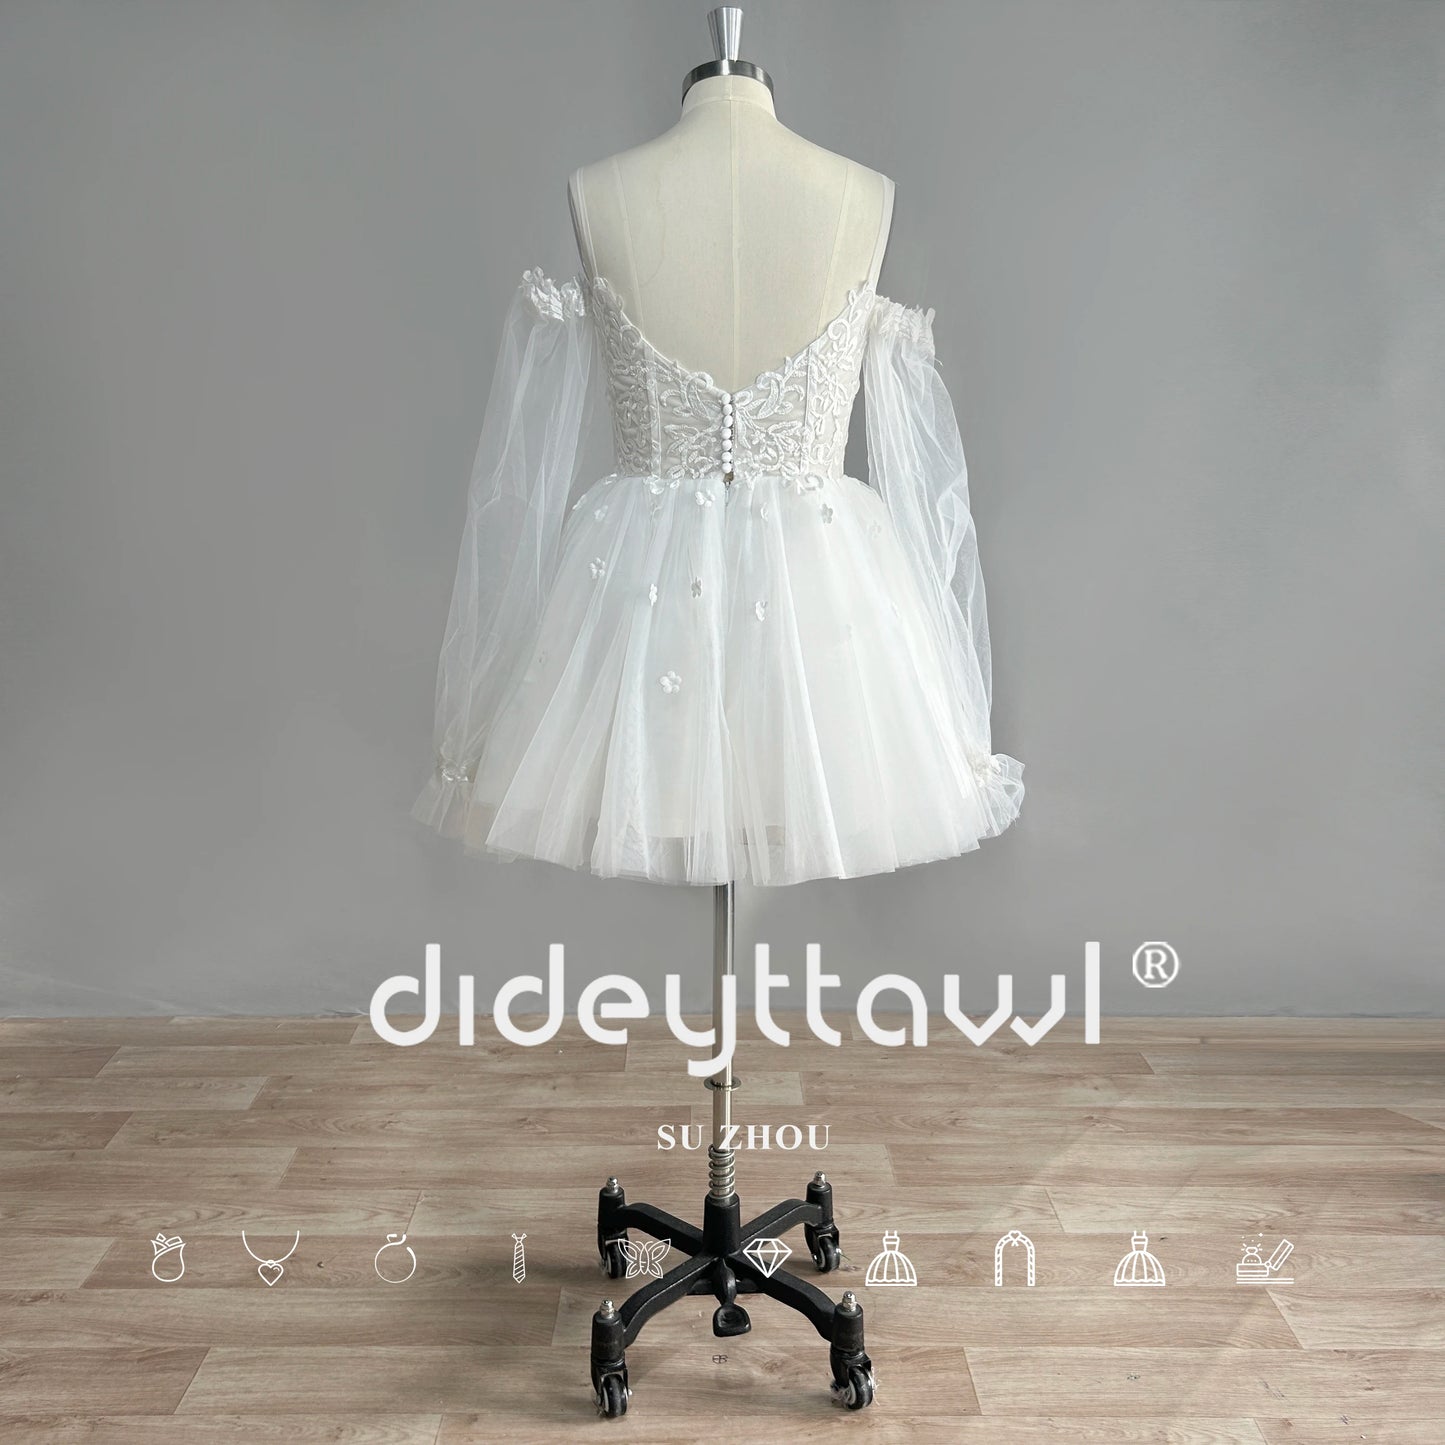 Dideyttawl sweetheart mangas compridas tule vestido de noiva curto mini comprimento fora do ombro vestido de noiva Real Picture